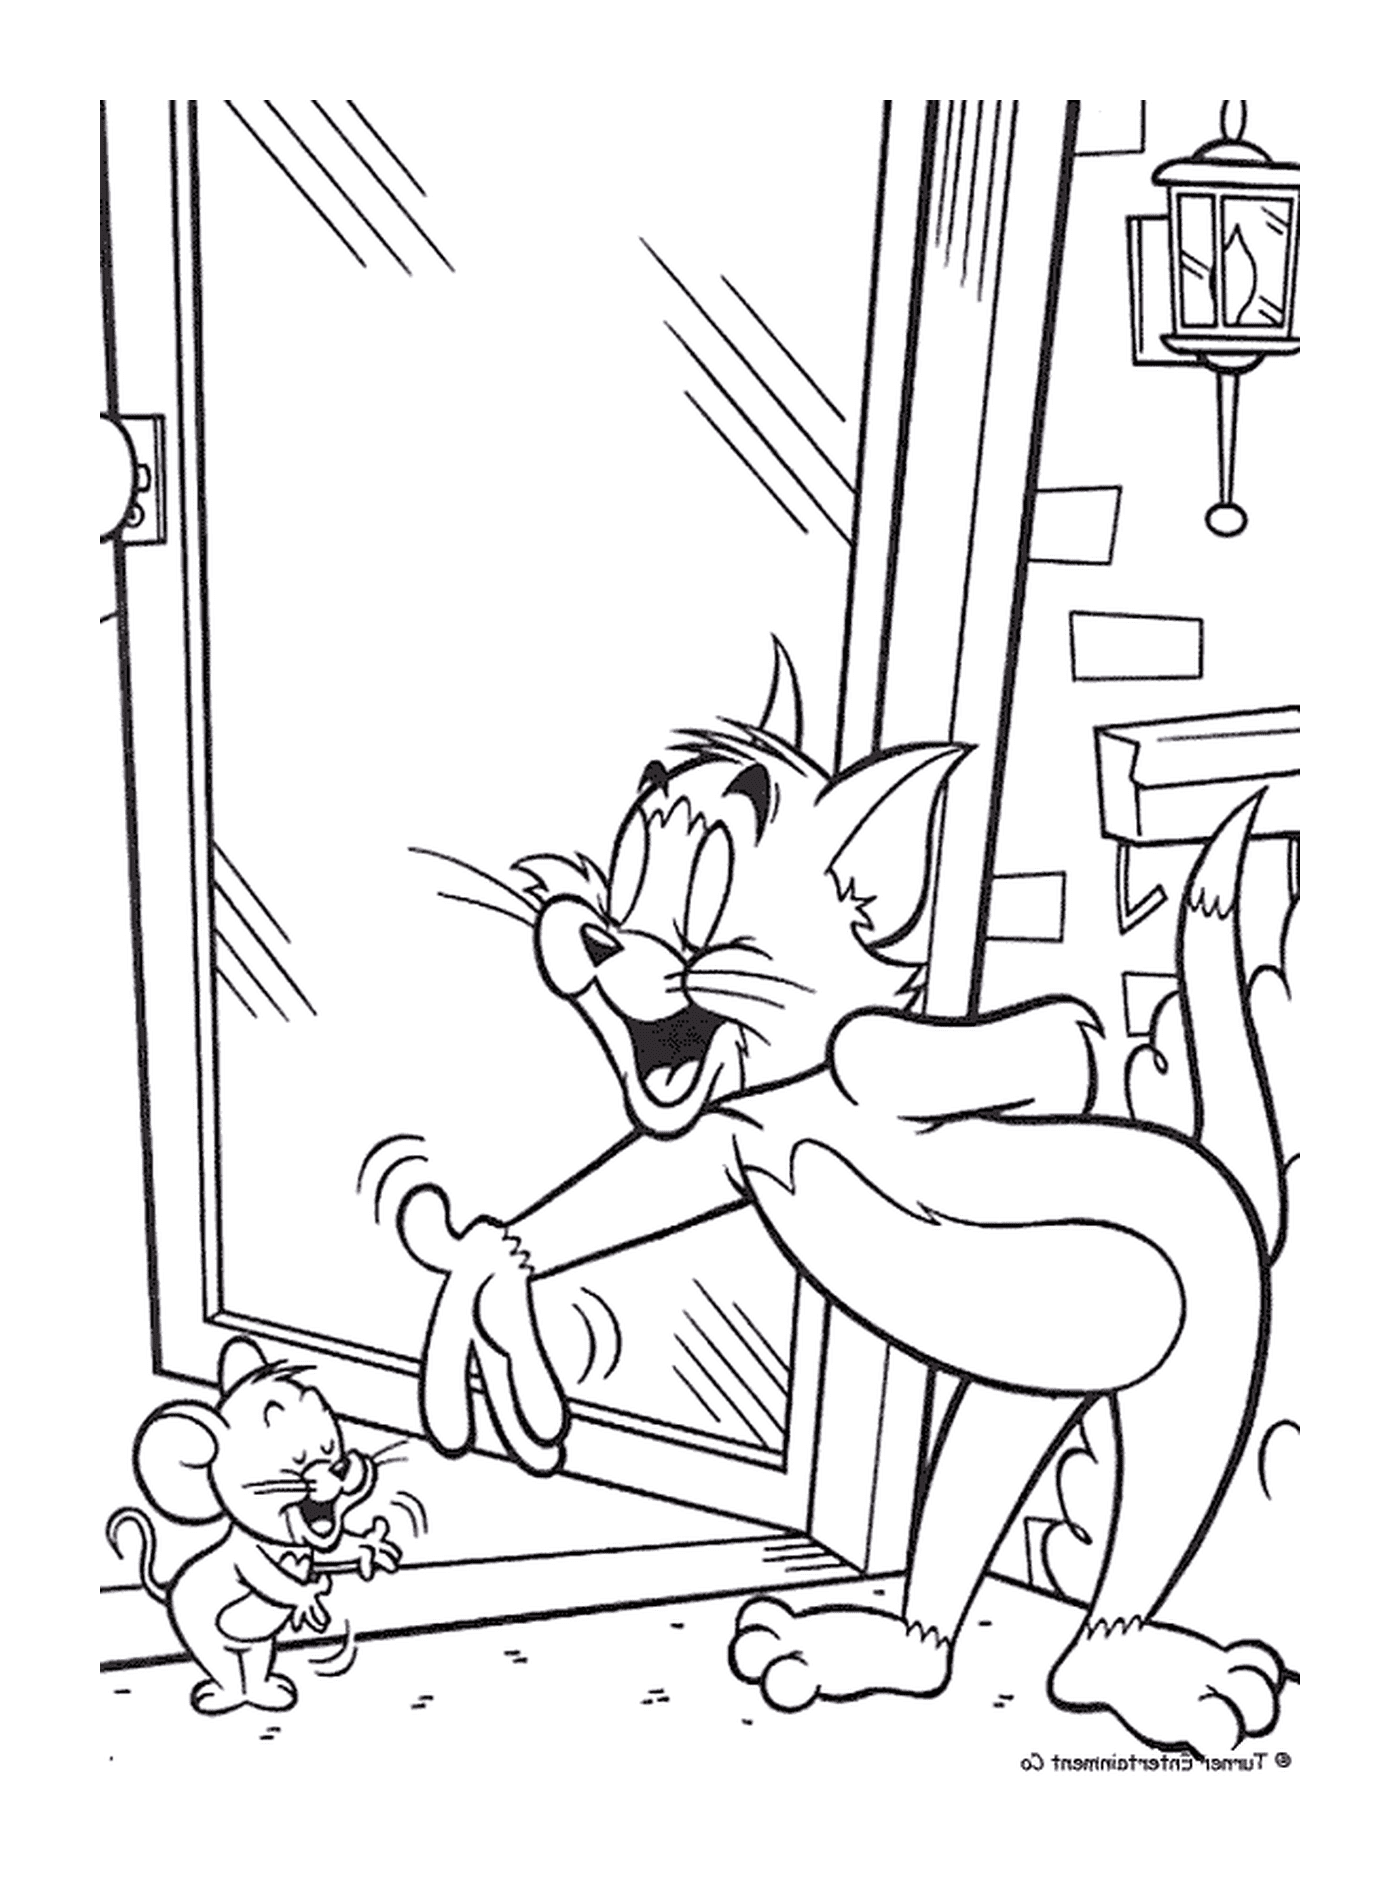   Tom et Jerry se saluent 